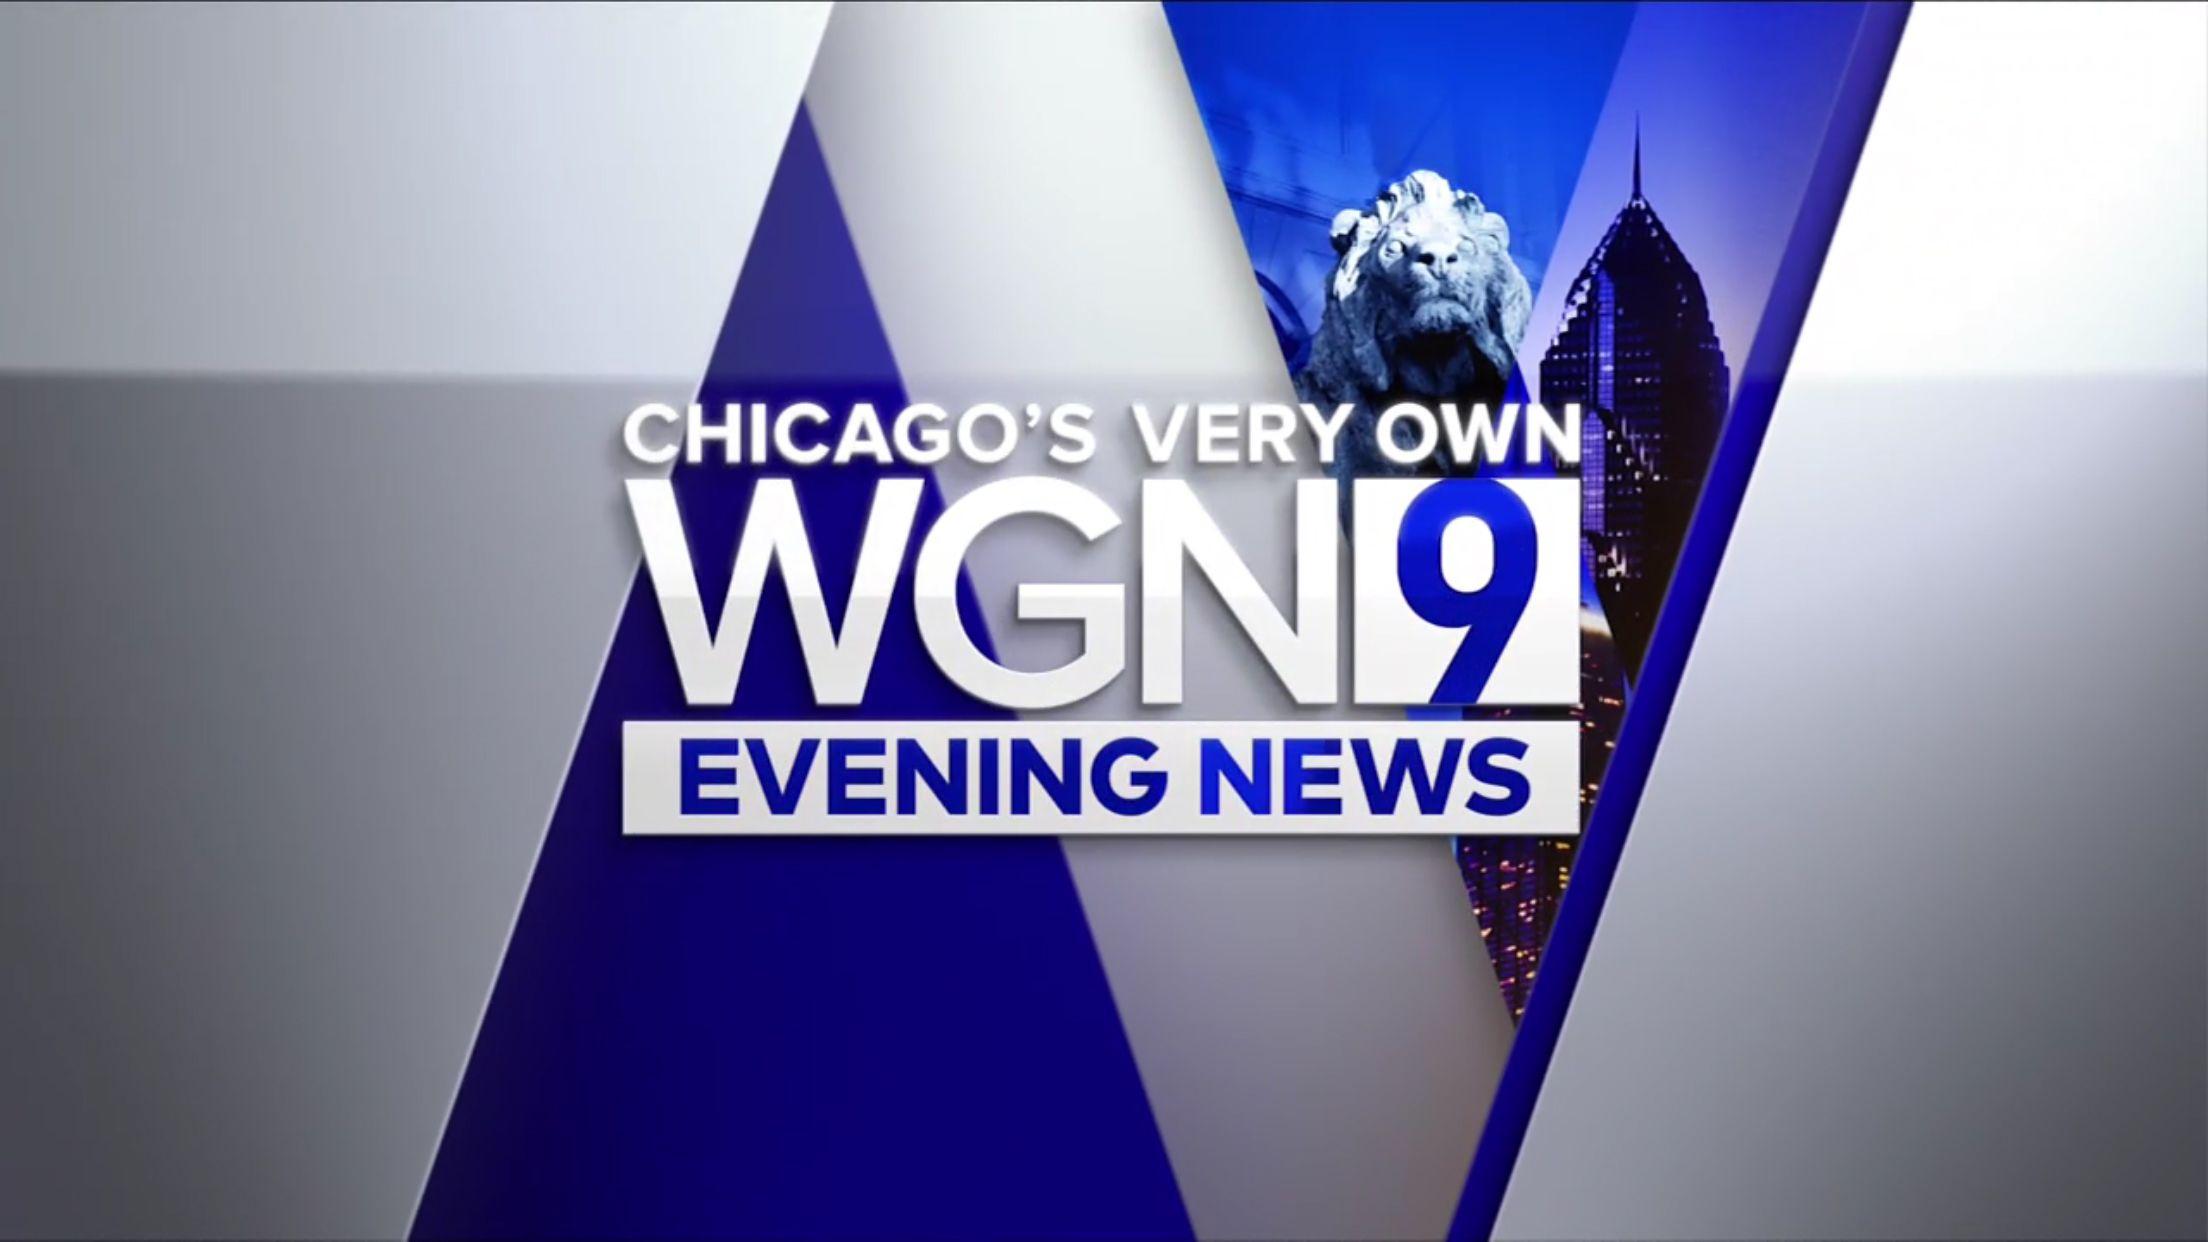 WGN 9 Chicago Logo - Chicago's very own' draws on city for inspiration - NewscastStudio